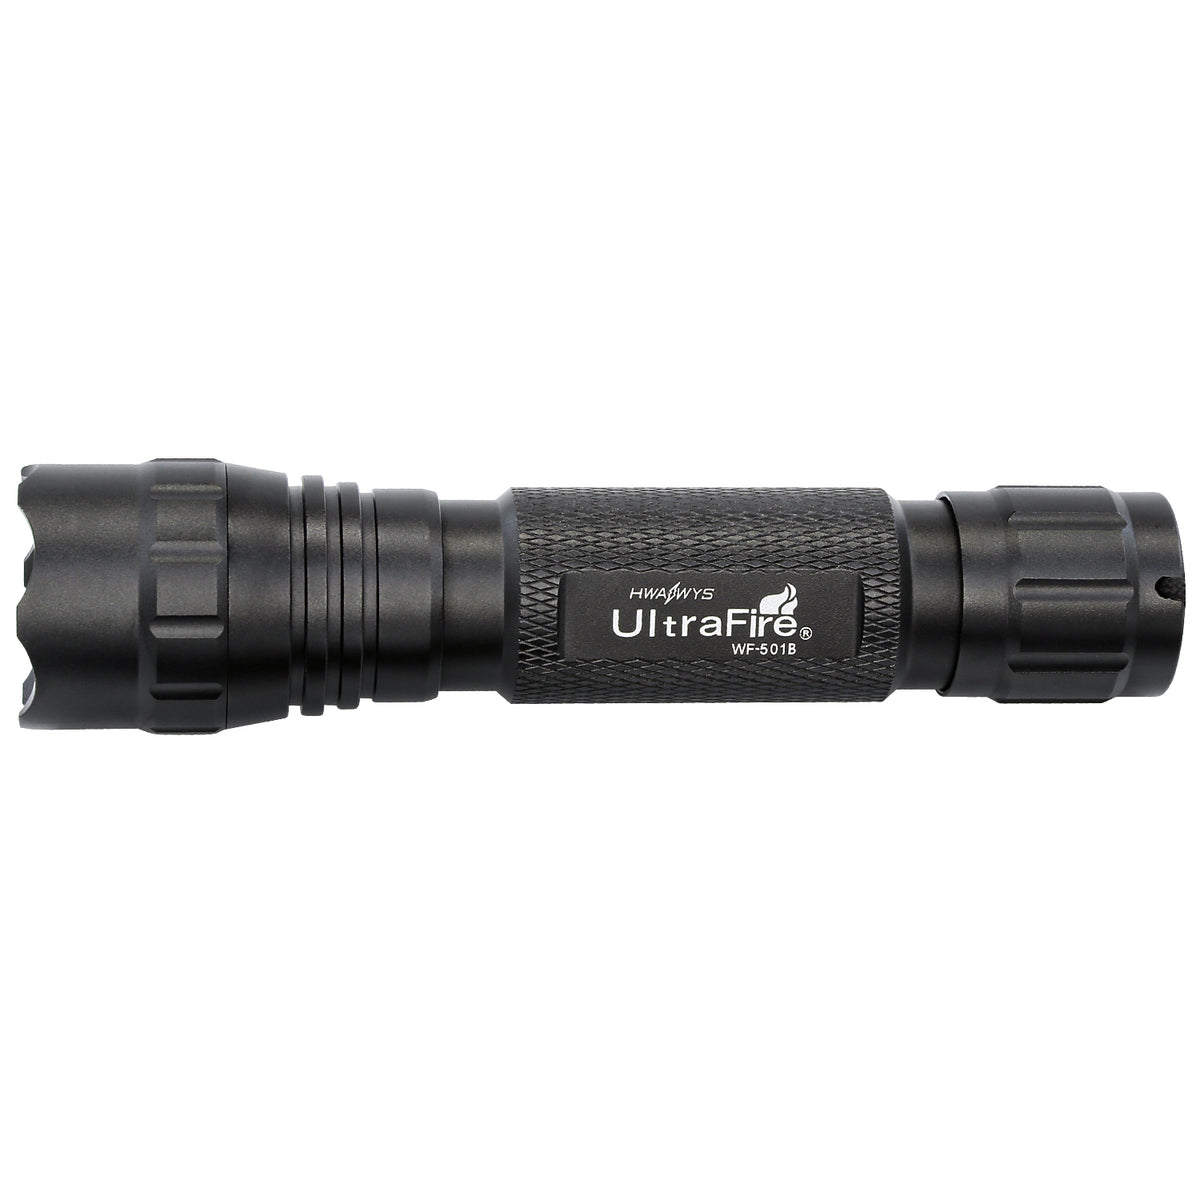 UltraFire Classic WF-501 LED Tactical Flashlight